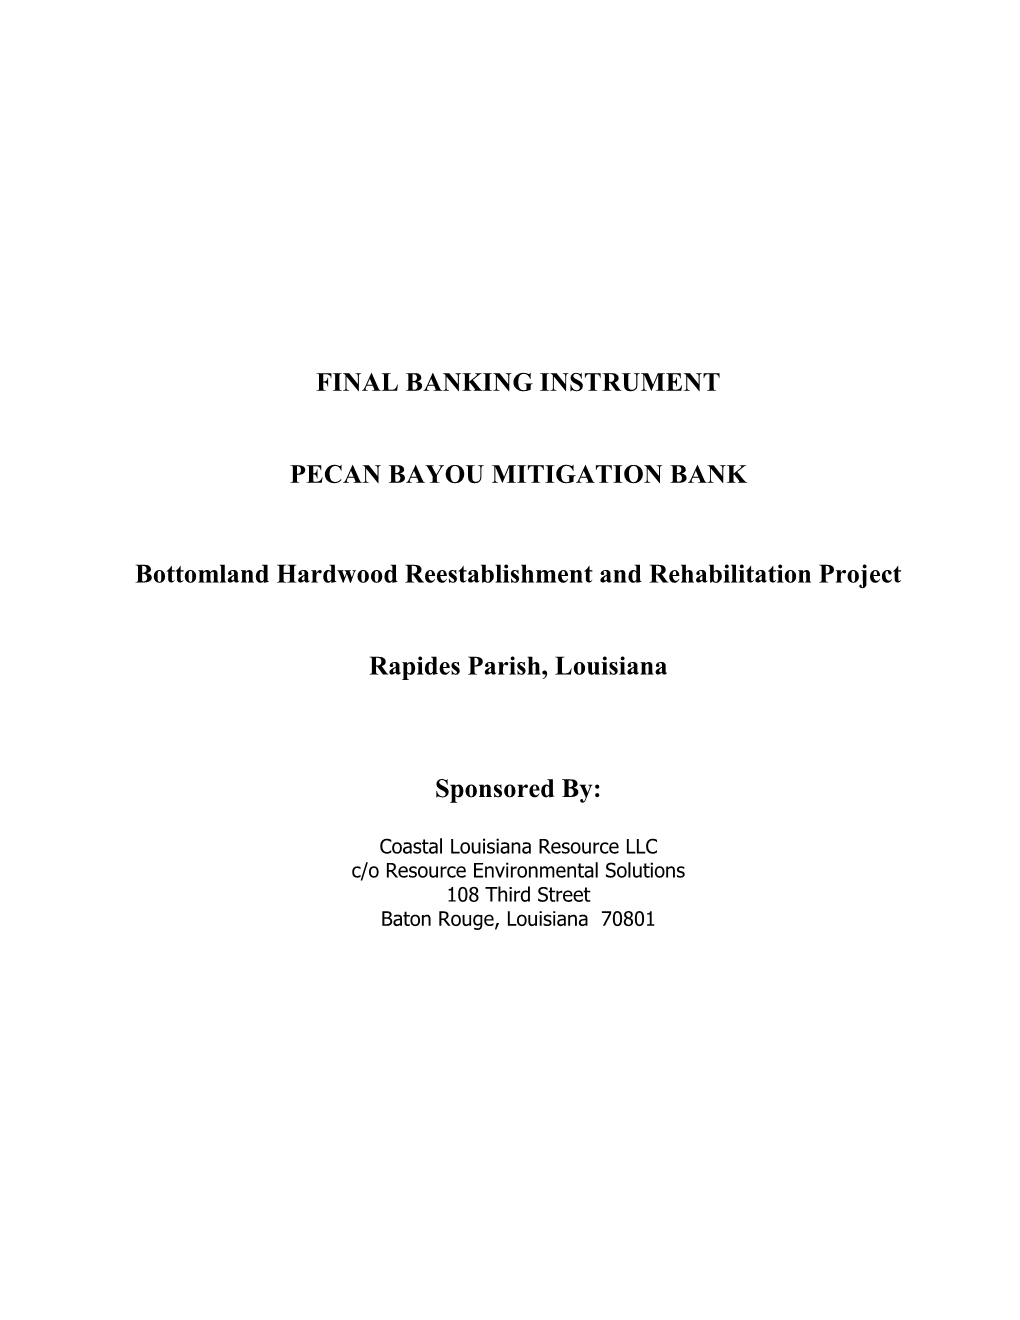 Final Banking Instrument Pecan Bayou Mitigation Bank